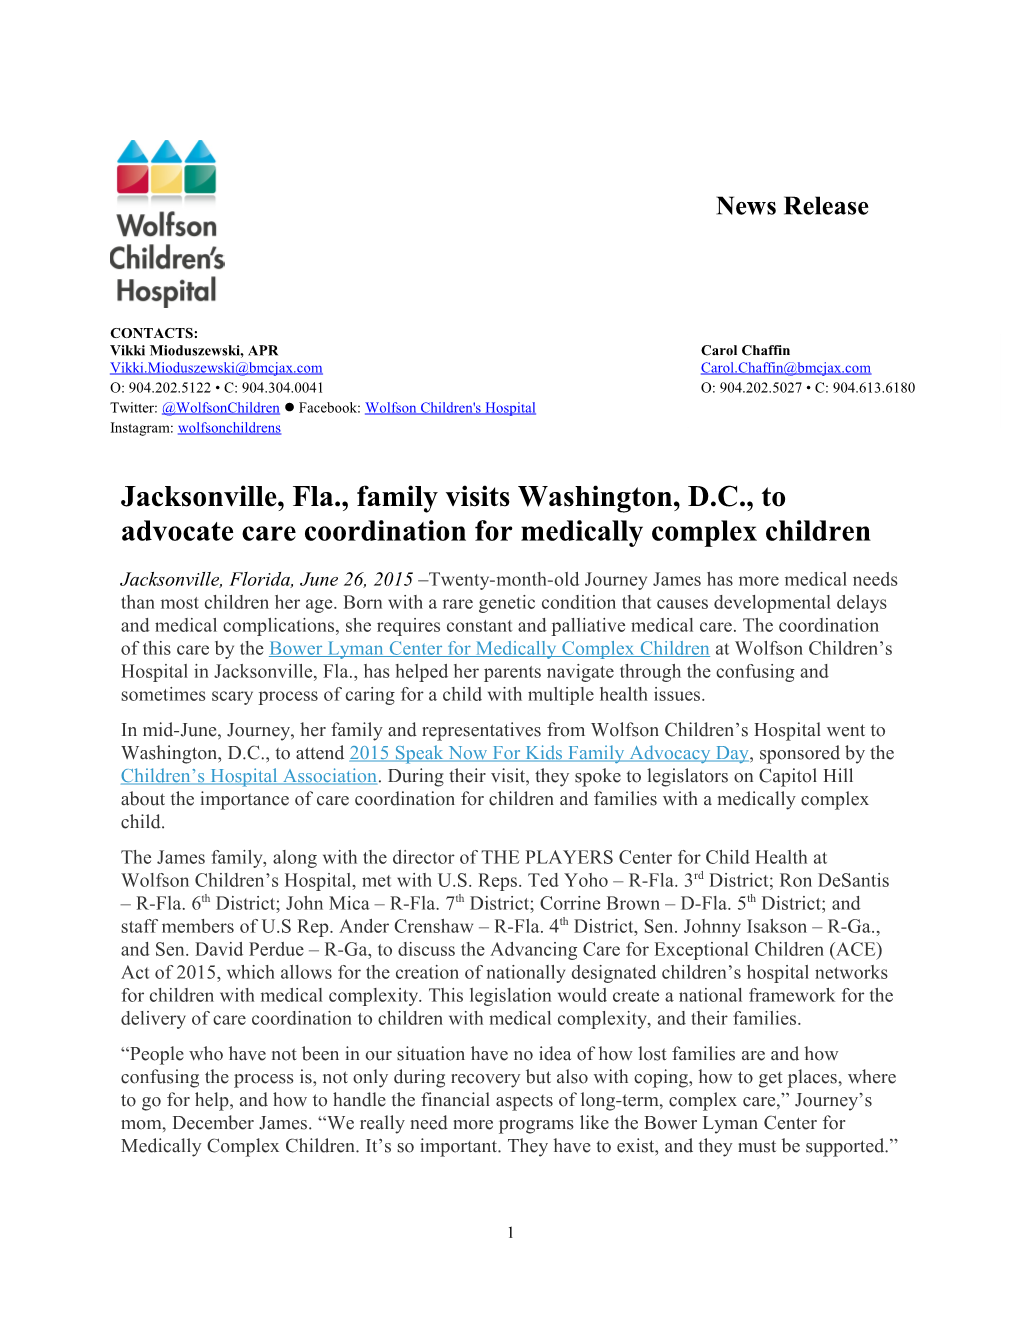 Jacksonville, Fla.,Family Visitswashington, D.C.,To Advocate Care Coordination for Medically